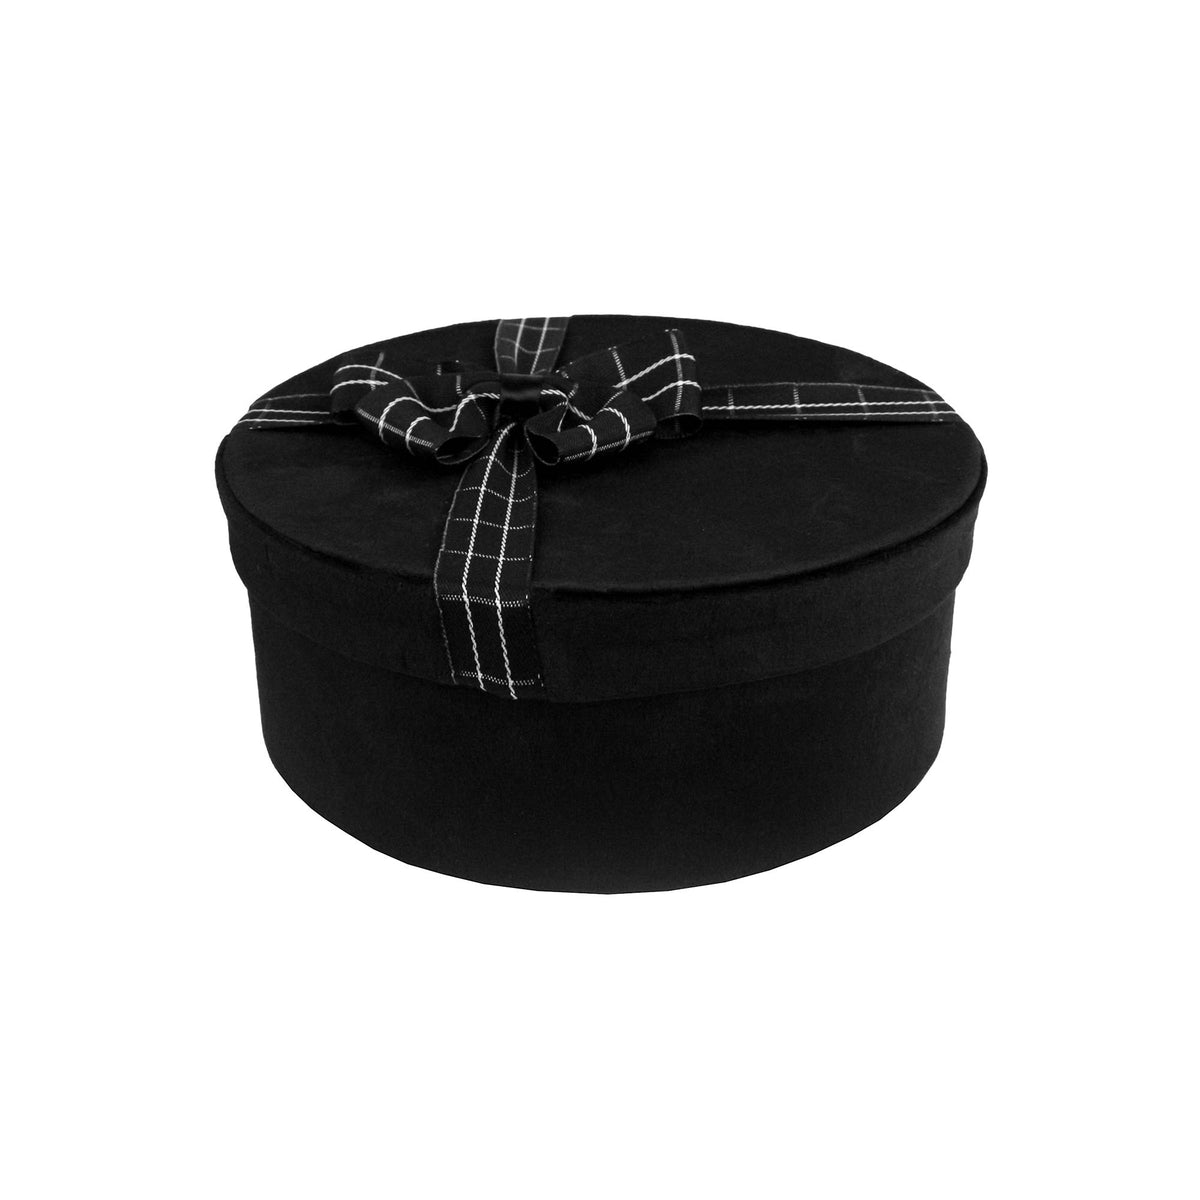 Single Black Velvet Gift Box with Striped Ribbon